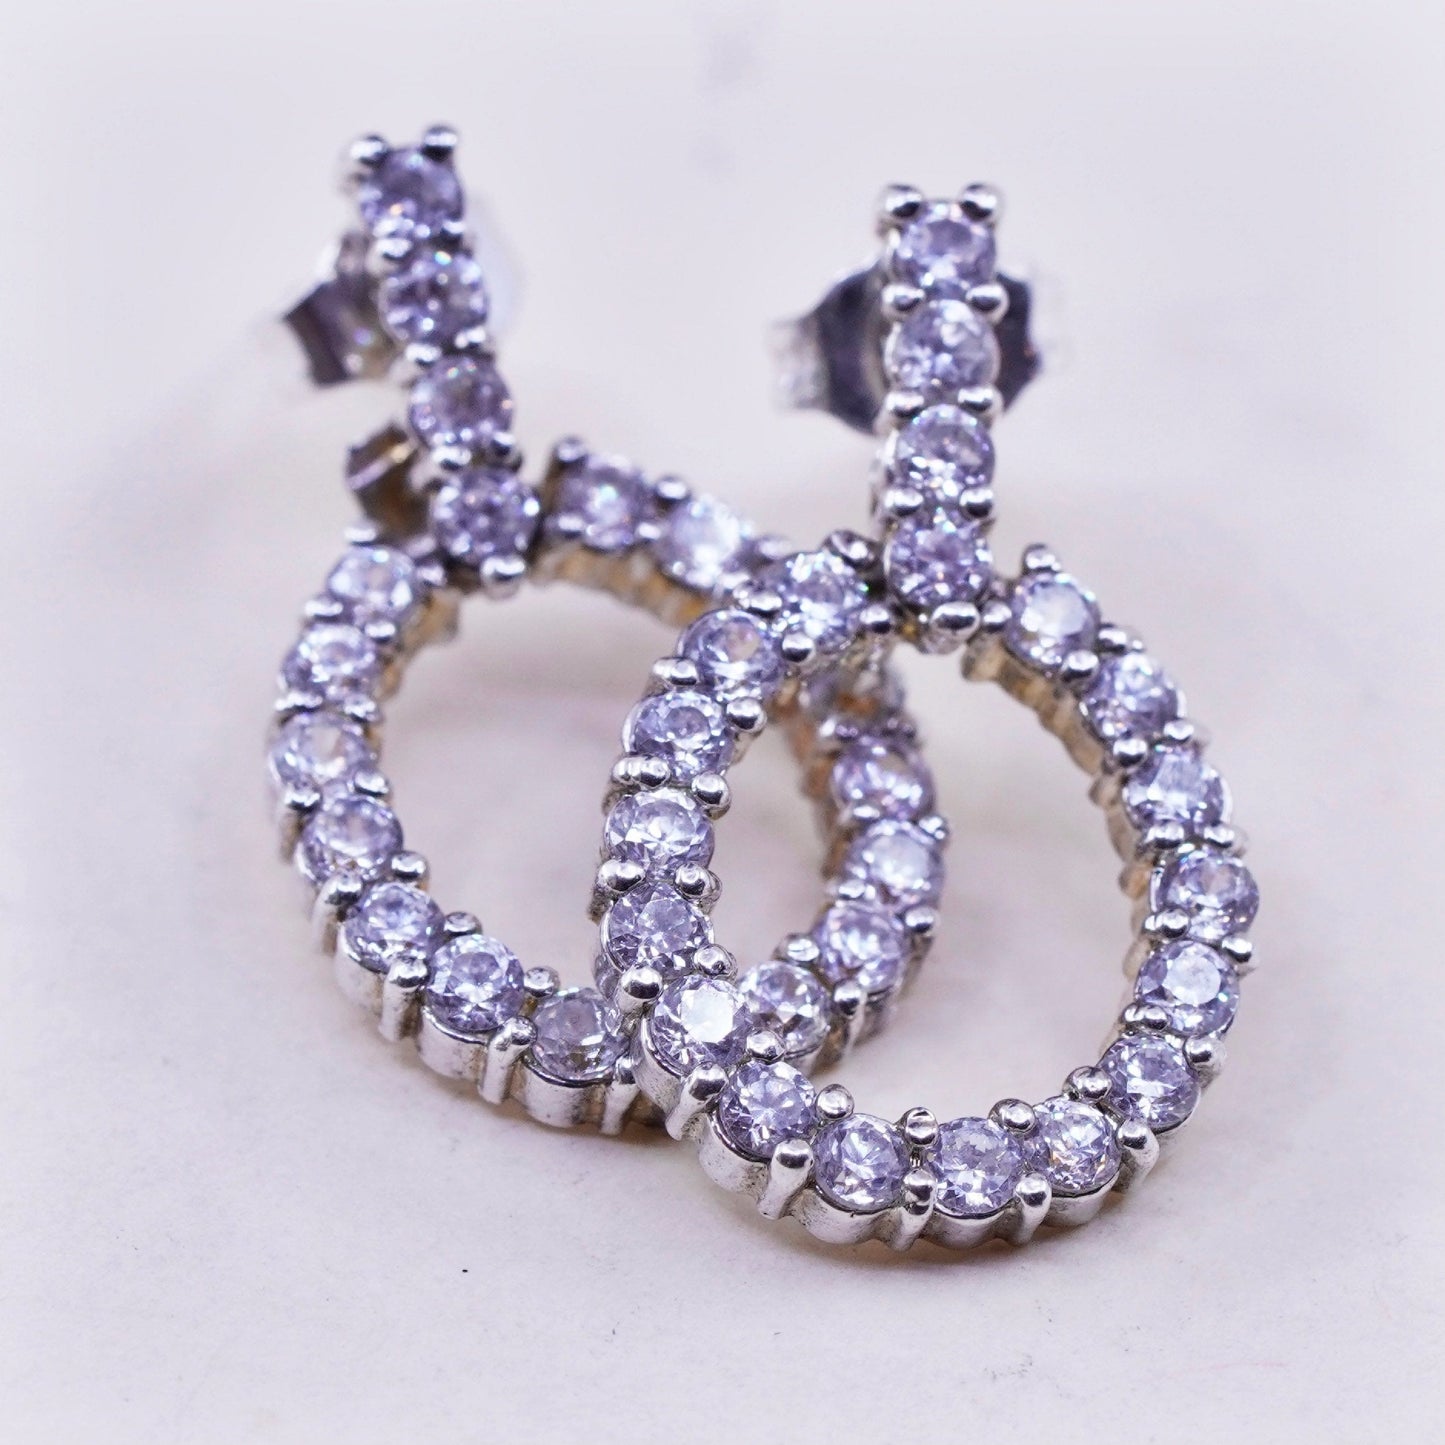 Vintage sterling silver handmade earrings, 925 teardrop with CZ